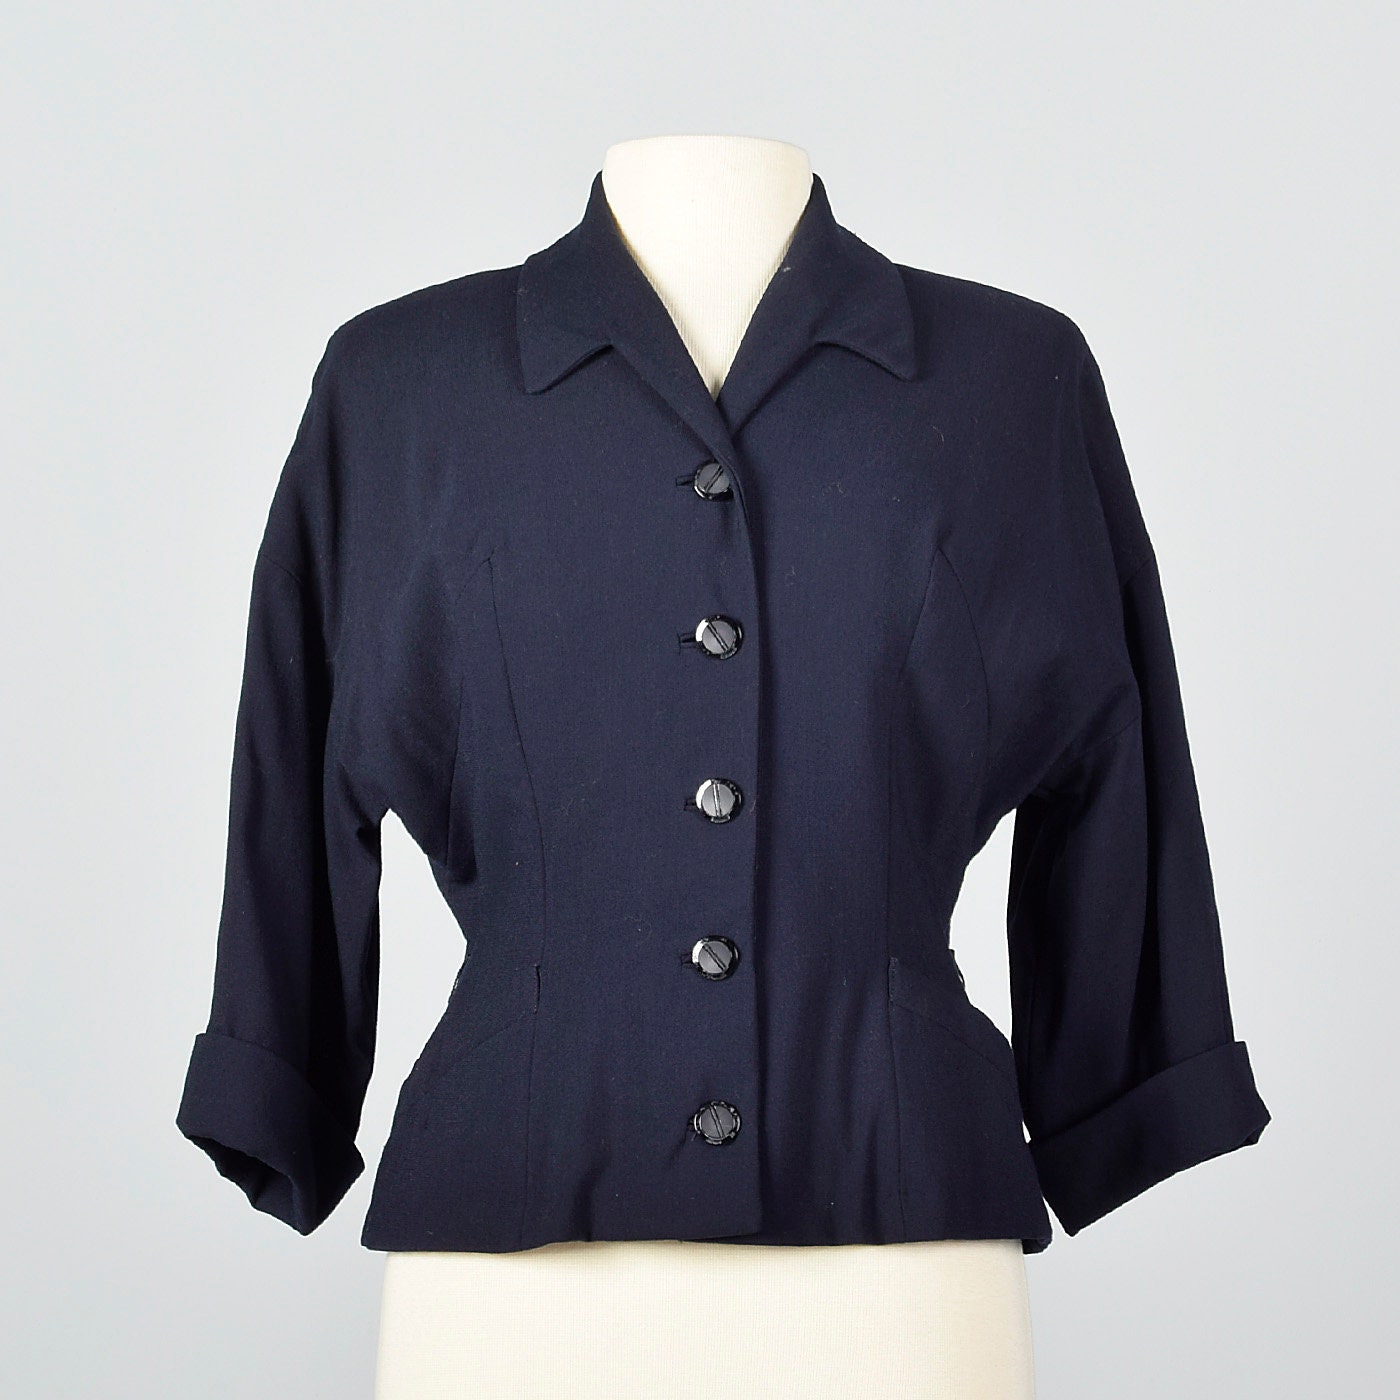 Medium 1950s Navy Blue Jacket Fitted Jacket Vintage Separates - Etsy